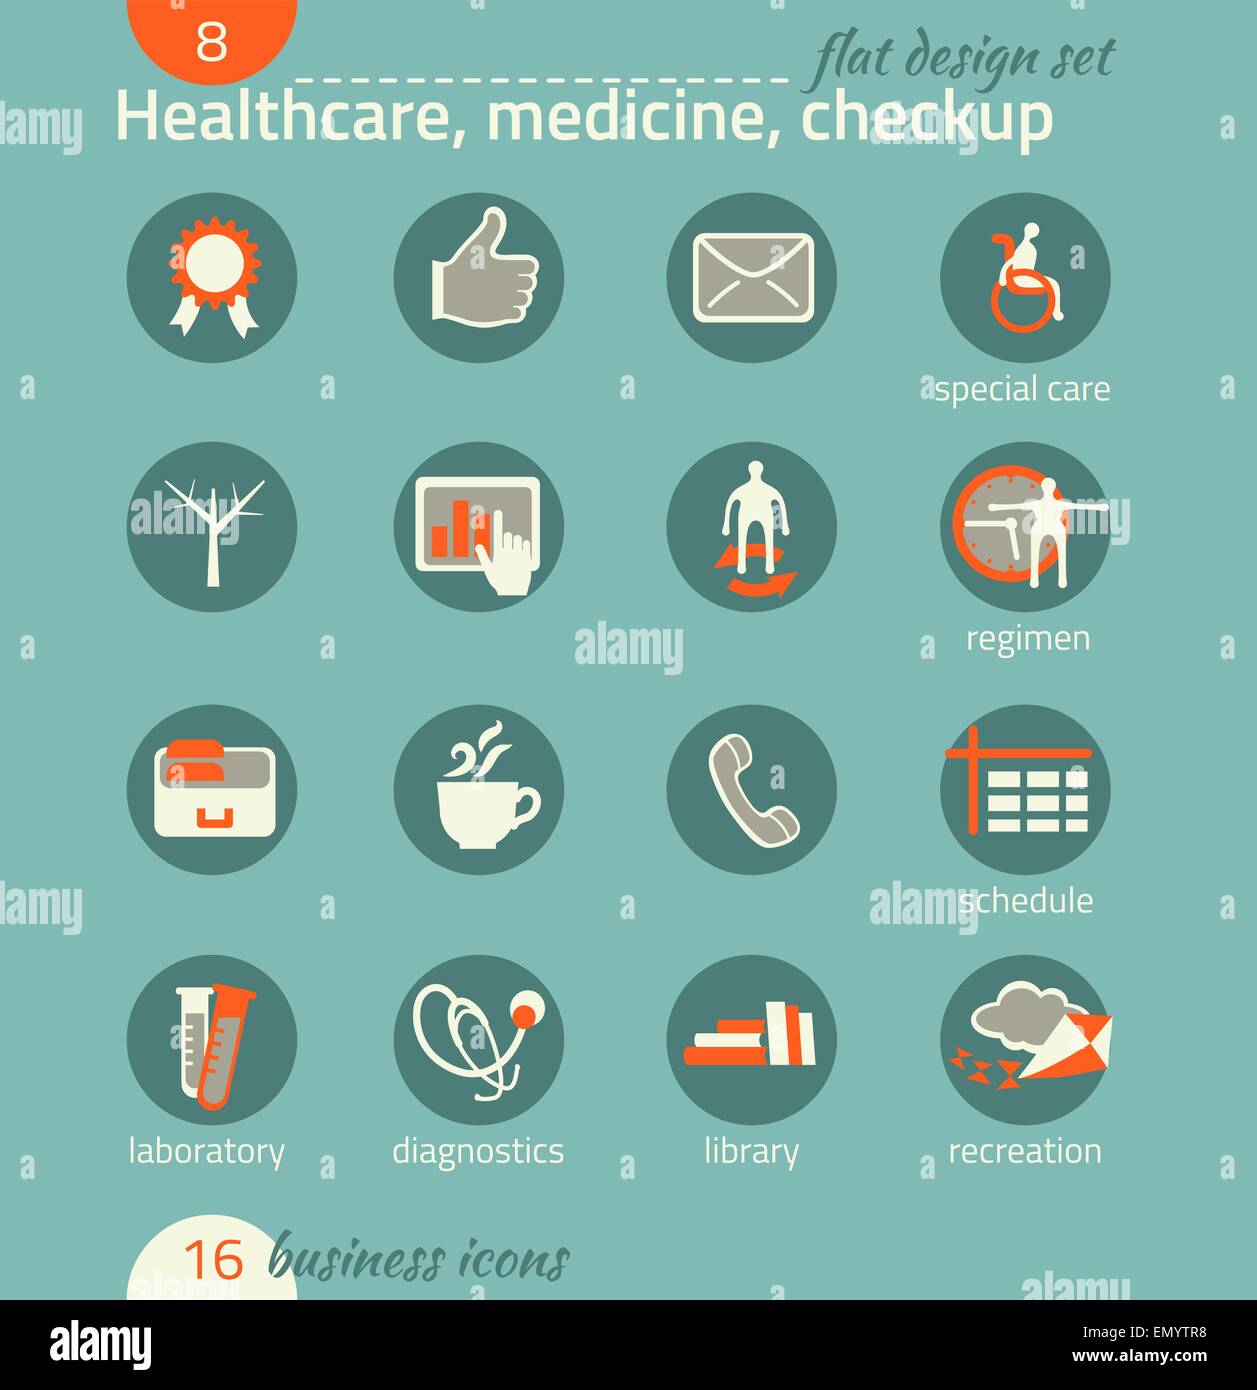 Business icon set. Healthcare, medicine, diagnostics. Flat design Stock Vector